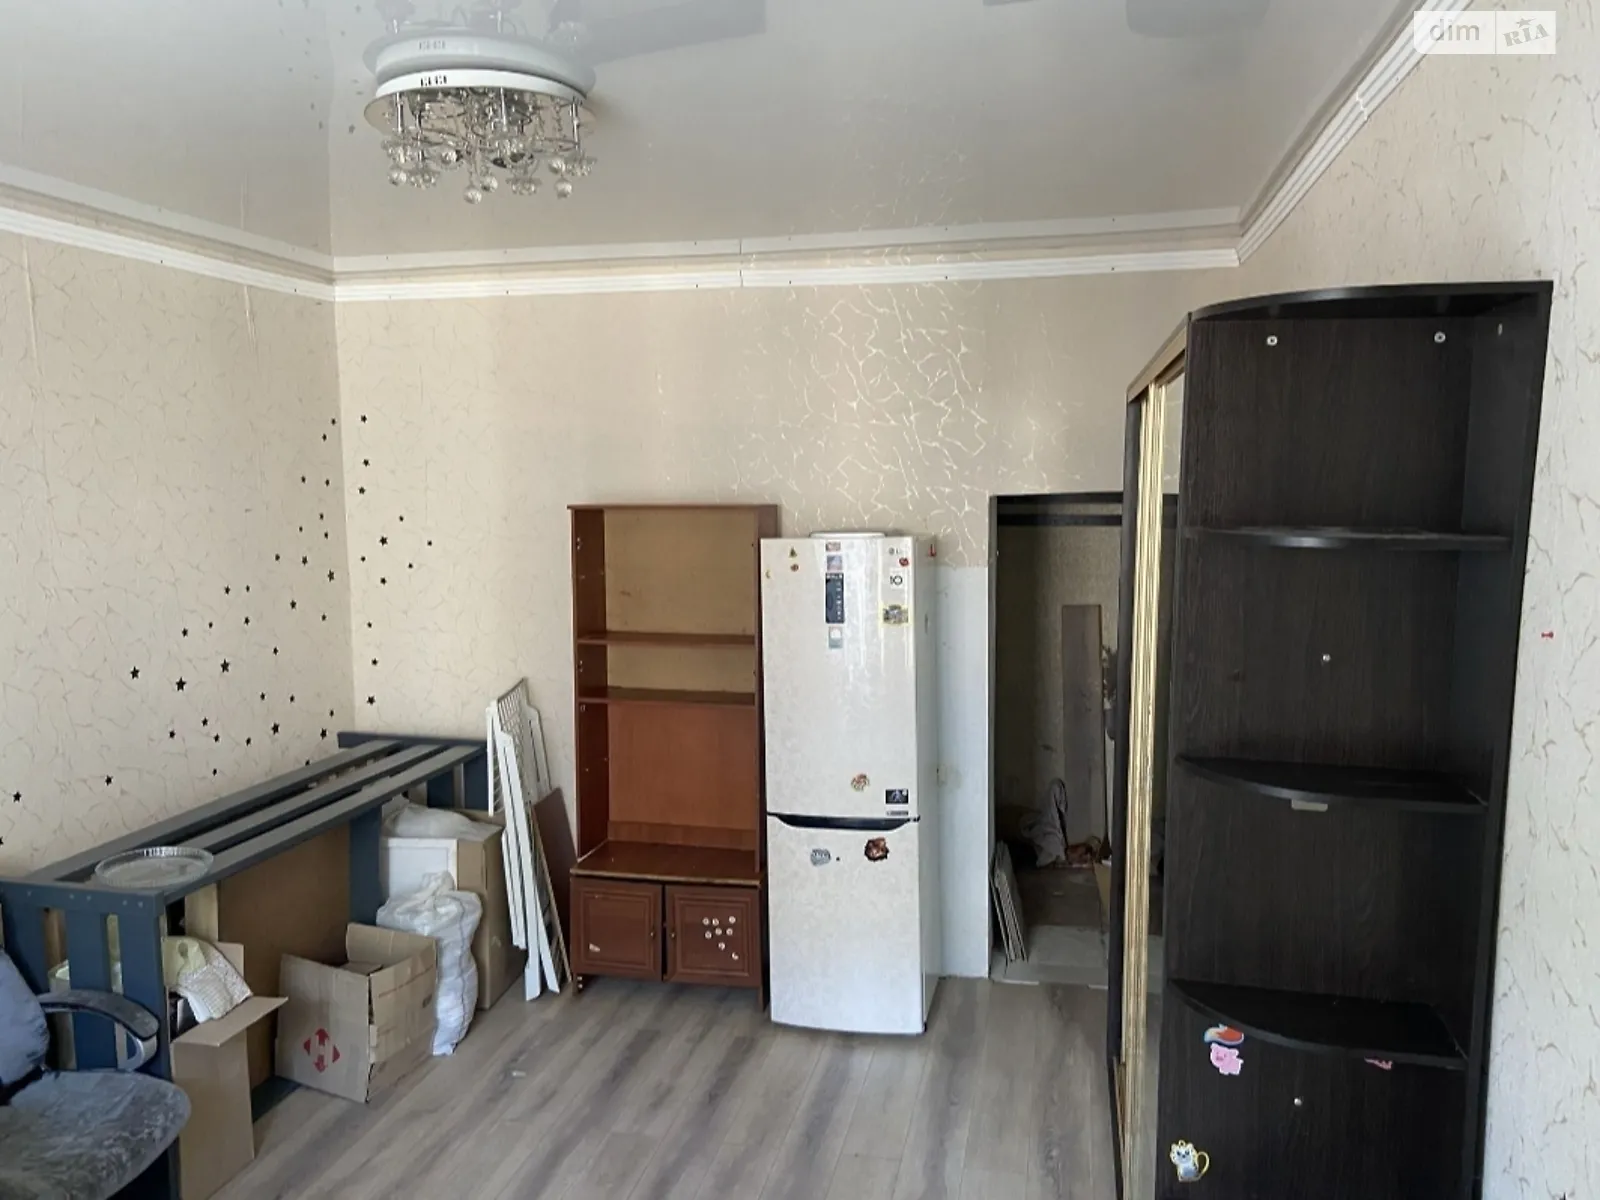 Продается комната 19 кв. м в Одессе, цена: 15500 $ - фото 1